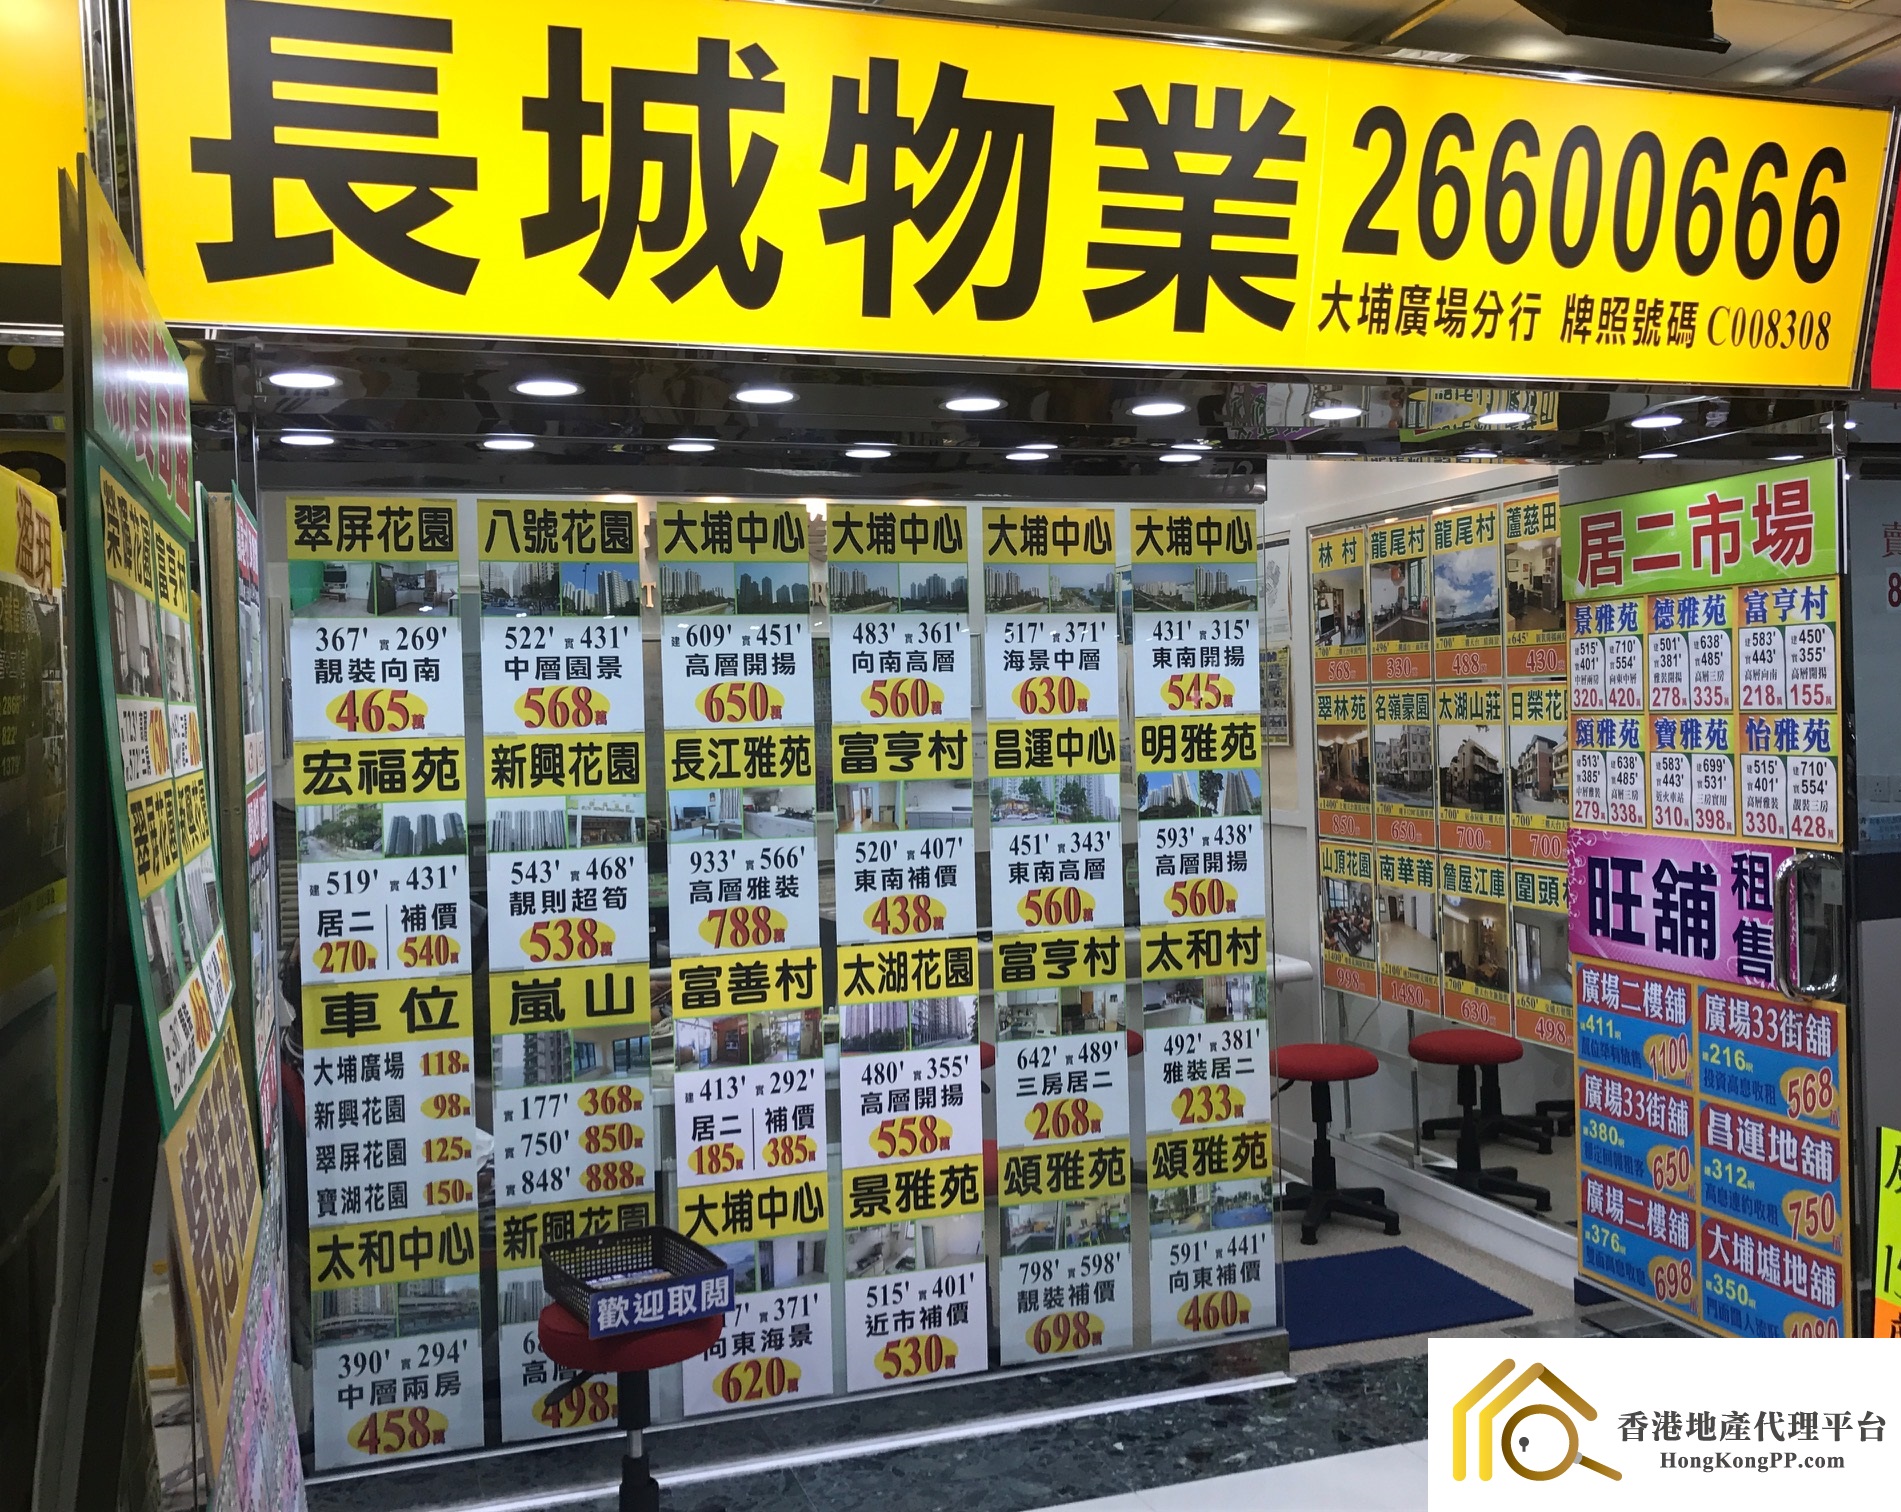 ShopEstate Agent: 長城物業 Great Wall Property Agency (大尾督)